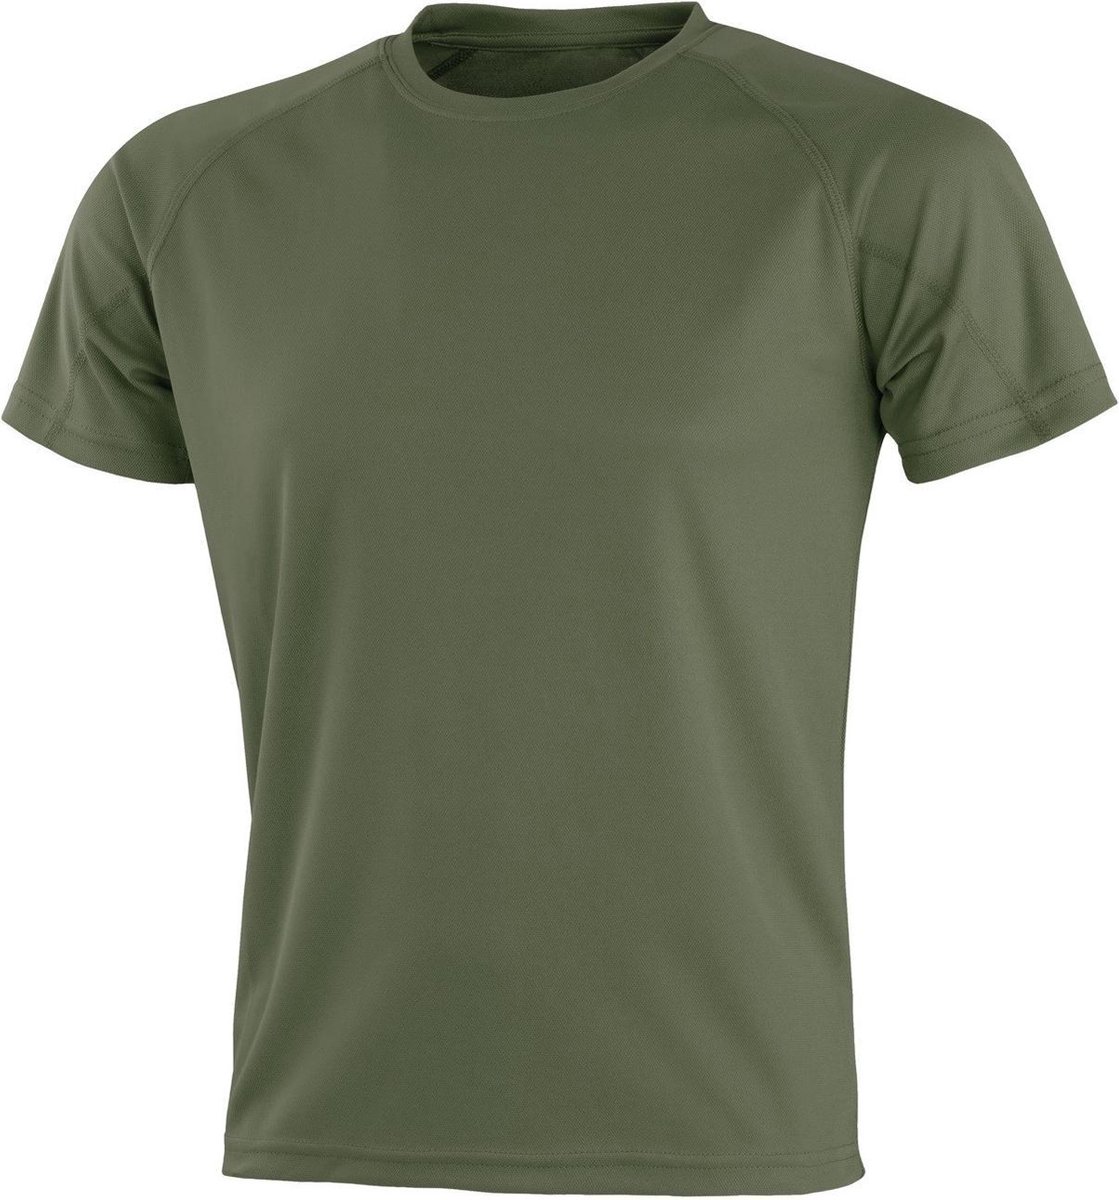 Senvi Sports Performance T-Shirt - Olive - S - Unisex